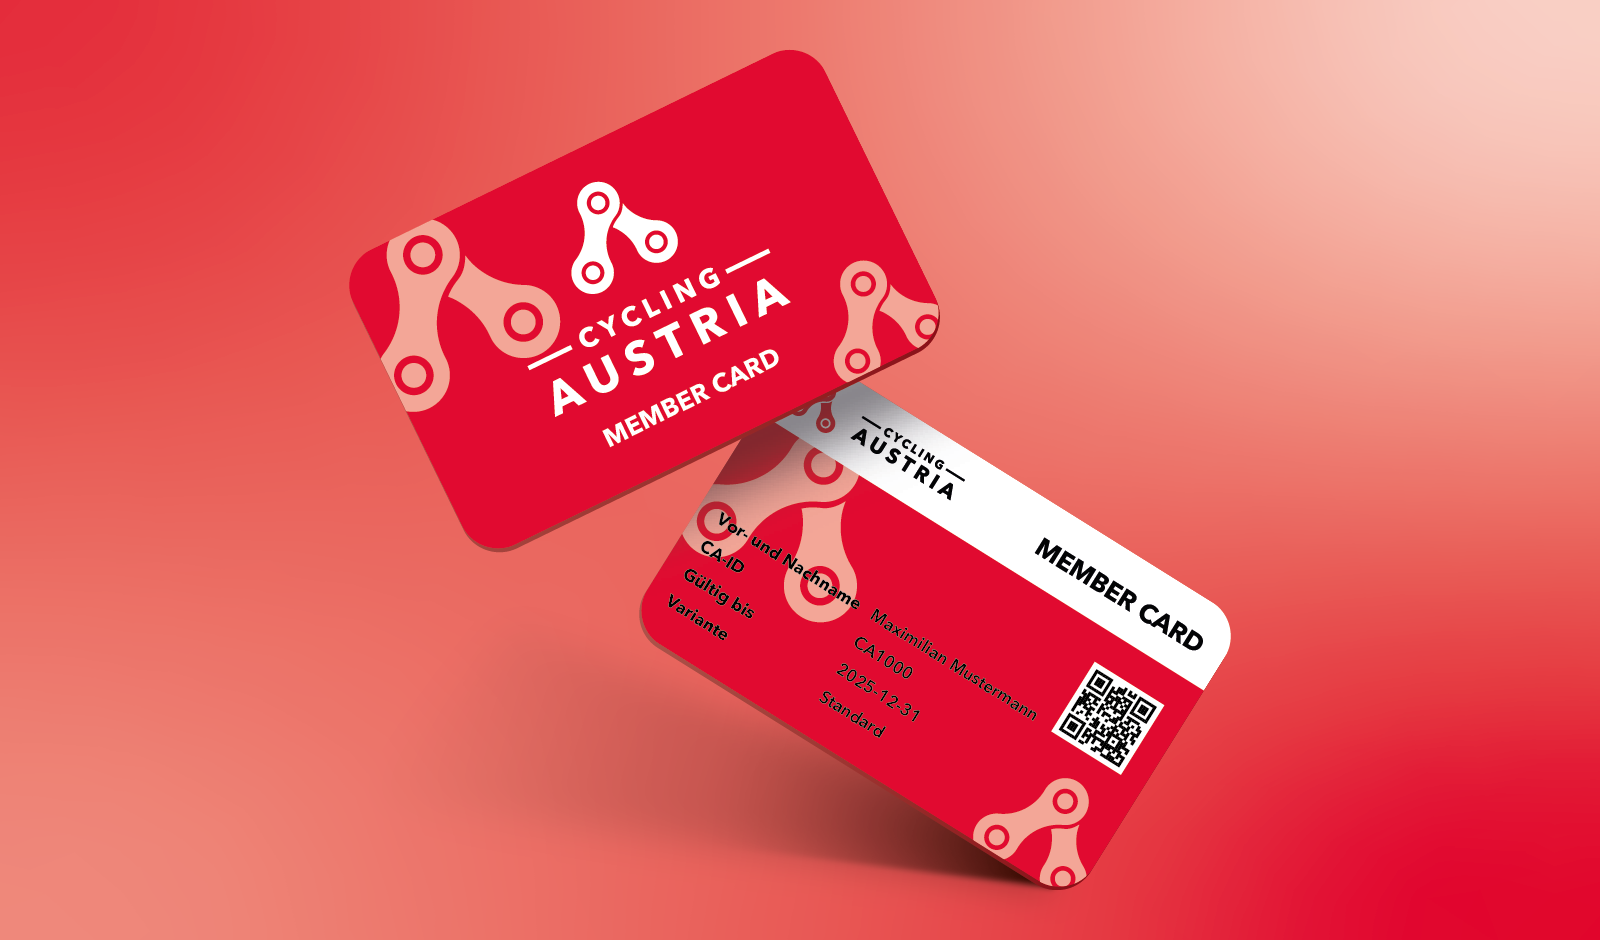 Cycling Austria Member Card